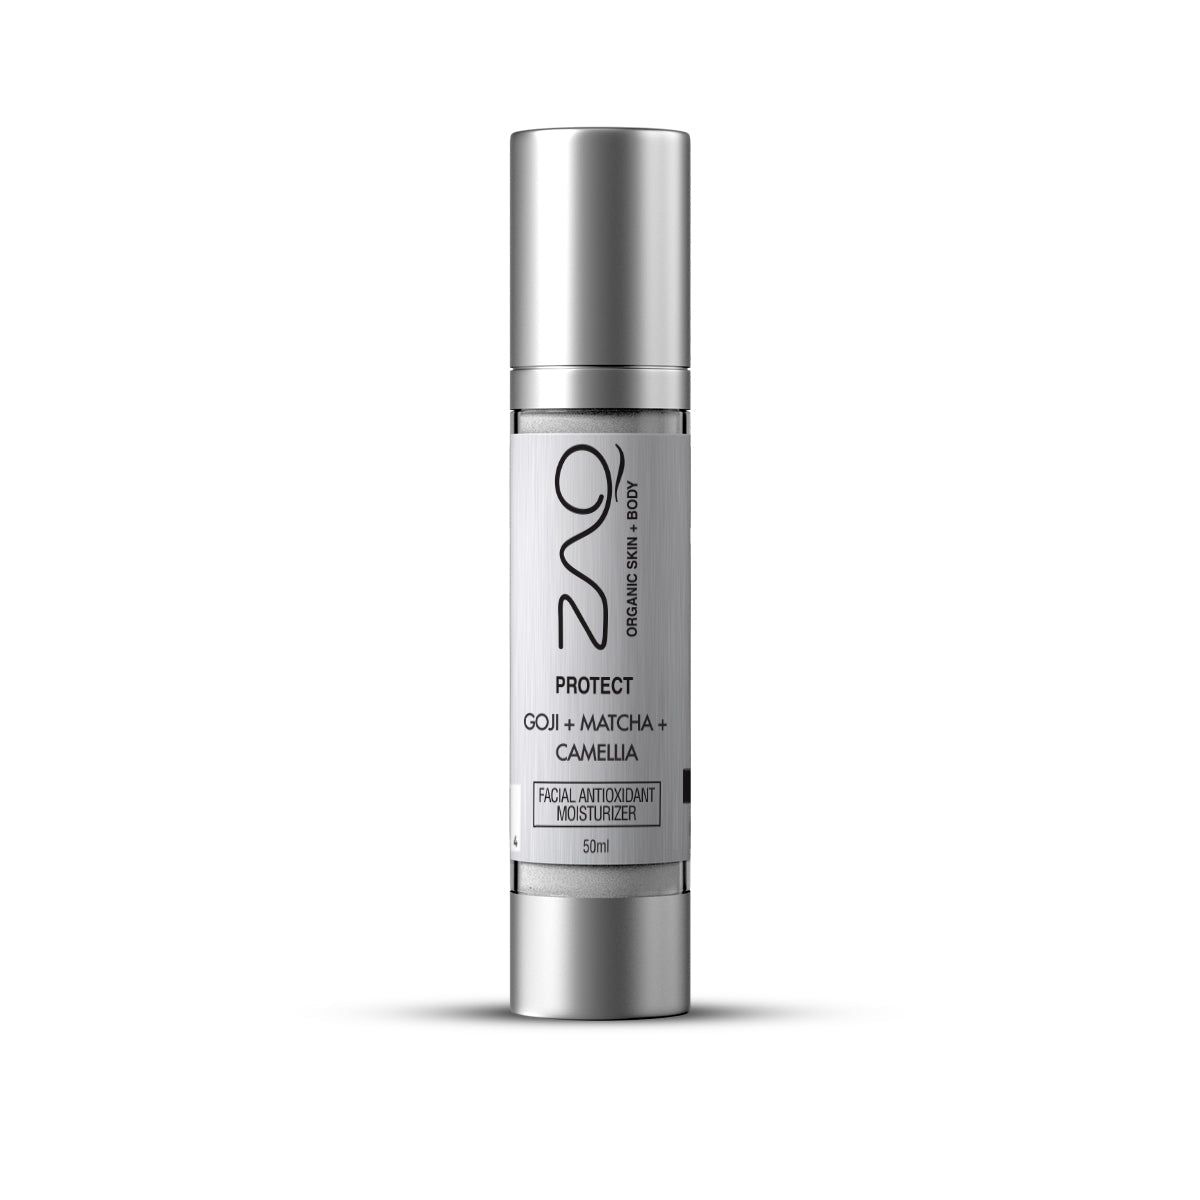 ZAQ Organic Protect Antioxidant Moisturizer - Goji + Matcha + Camellia by ZAQ Skin & Body